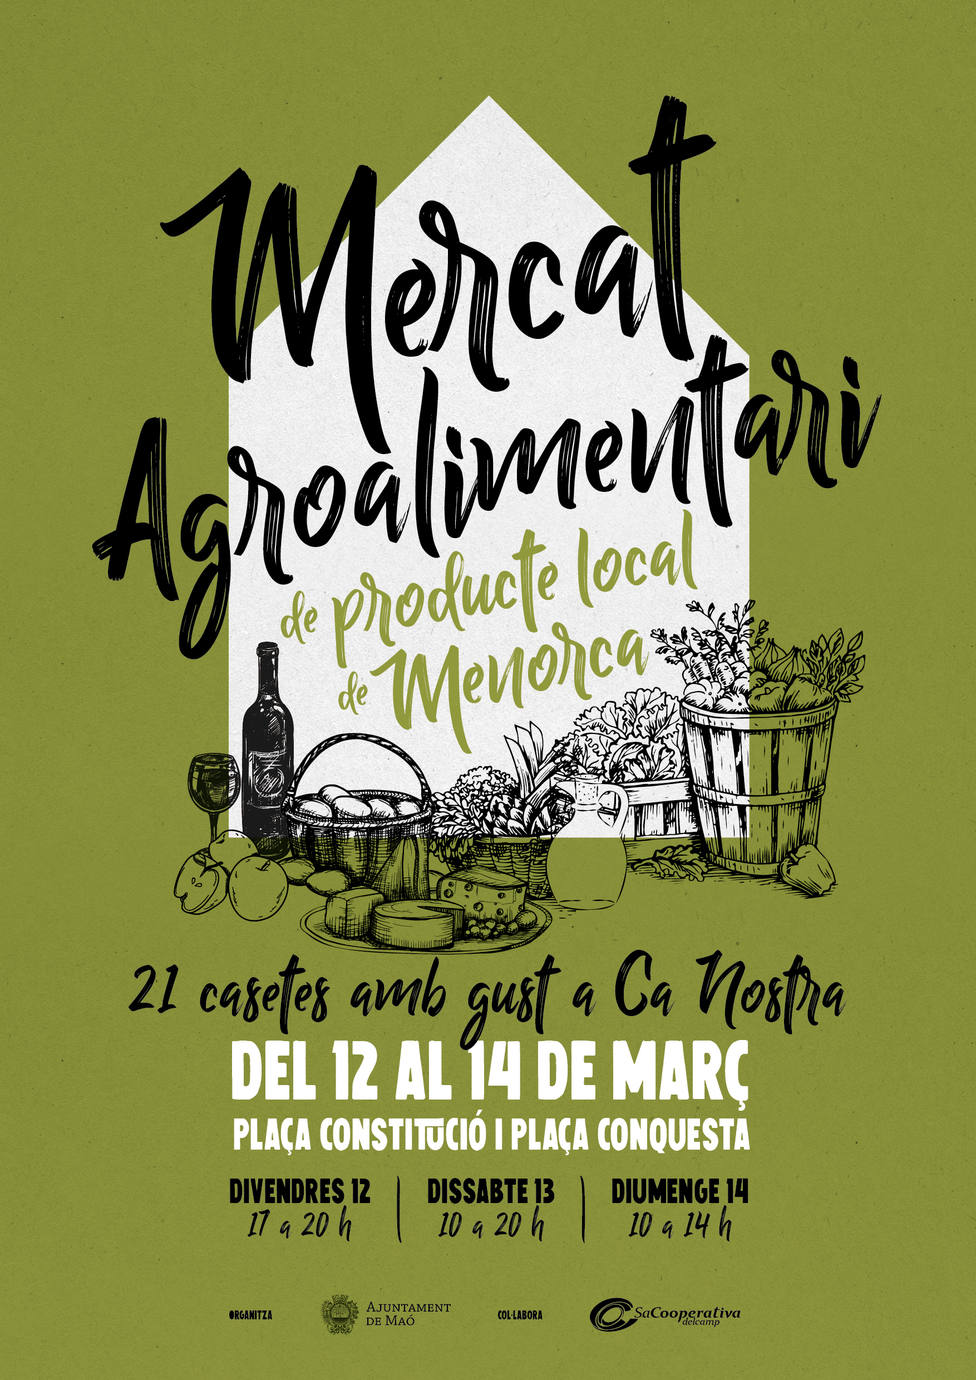 Mercado Agroalimentario de Producto Local de Menorca